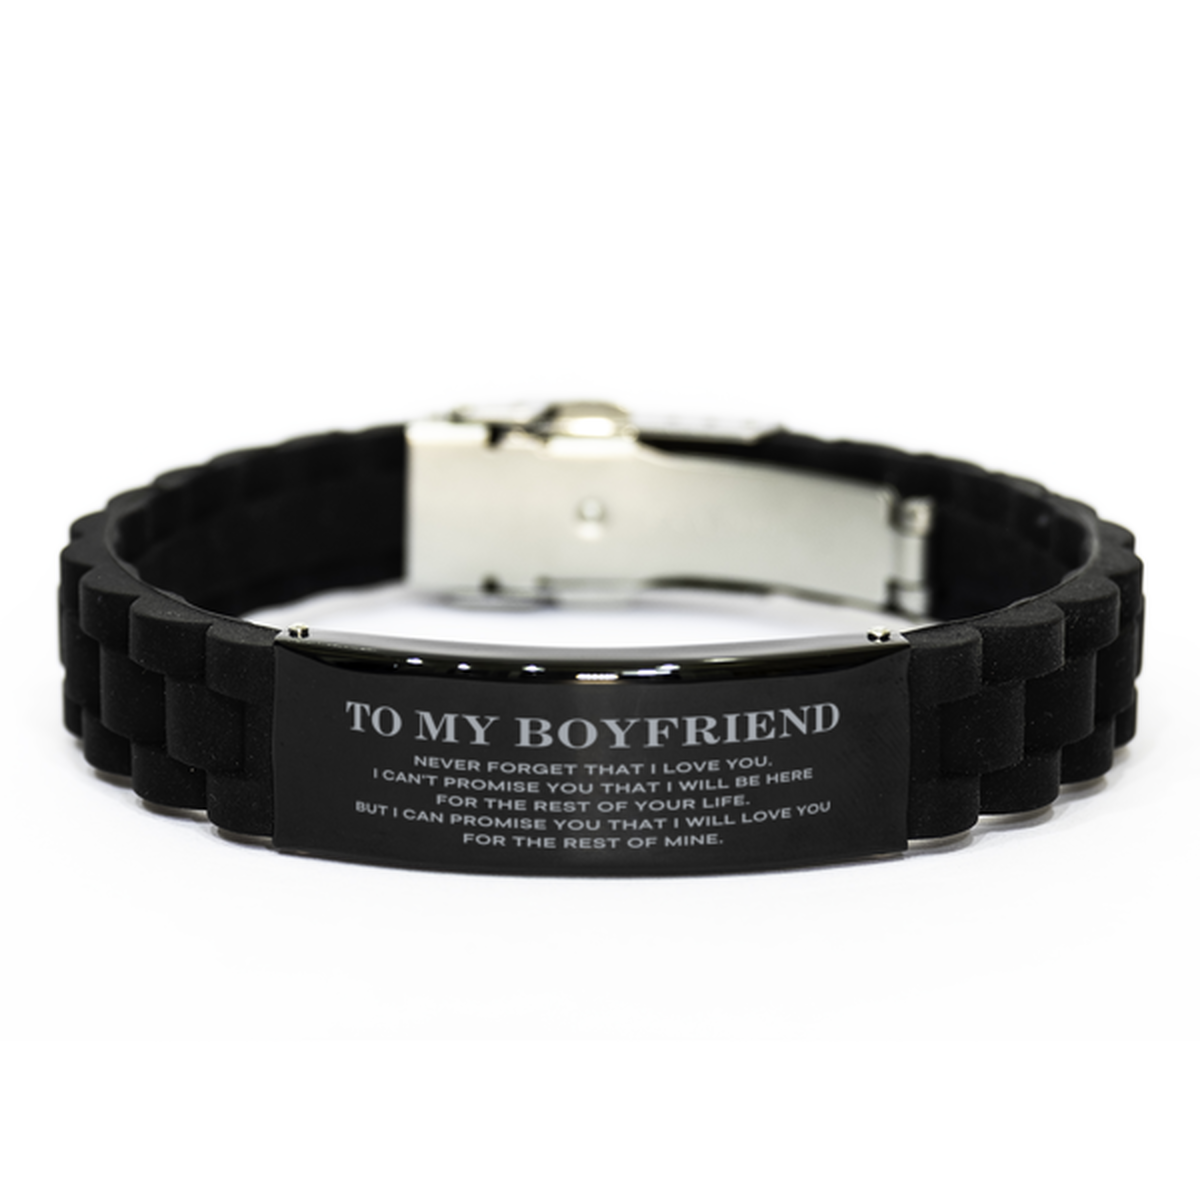 To My Boyfriend Gifts, I will love you for the rest of mine, Love Boyfriend Bracelet, Birthday Christmas Unique Black Glidelock Clasp Bracelet For Boyfriend